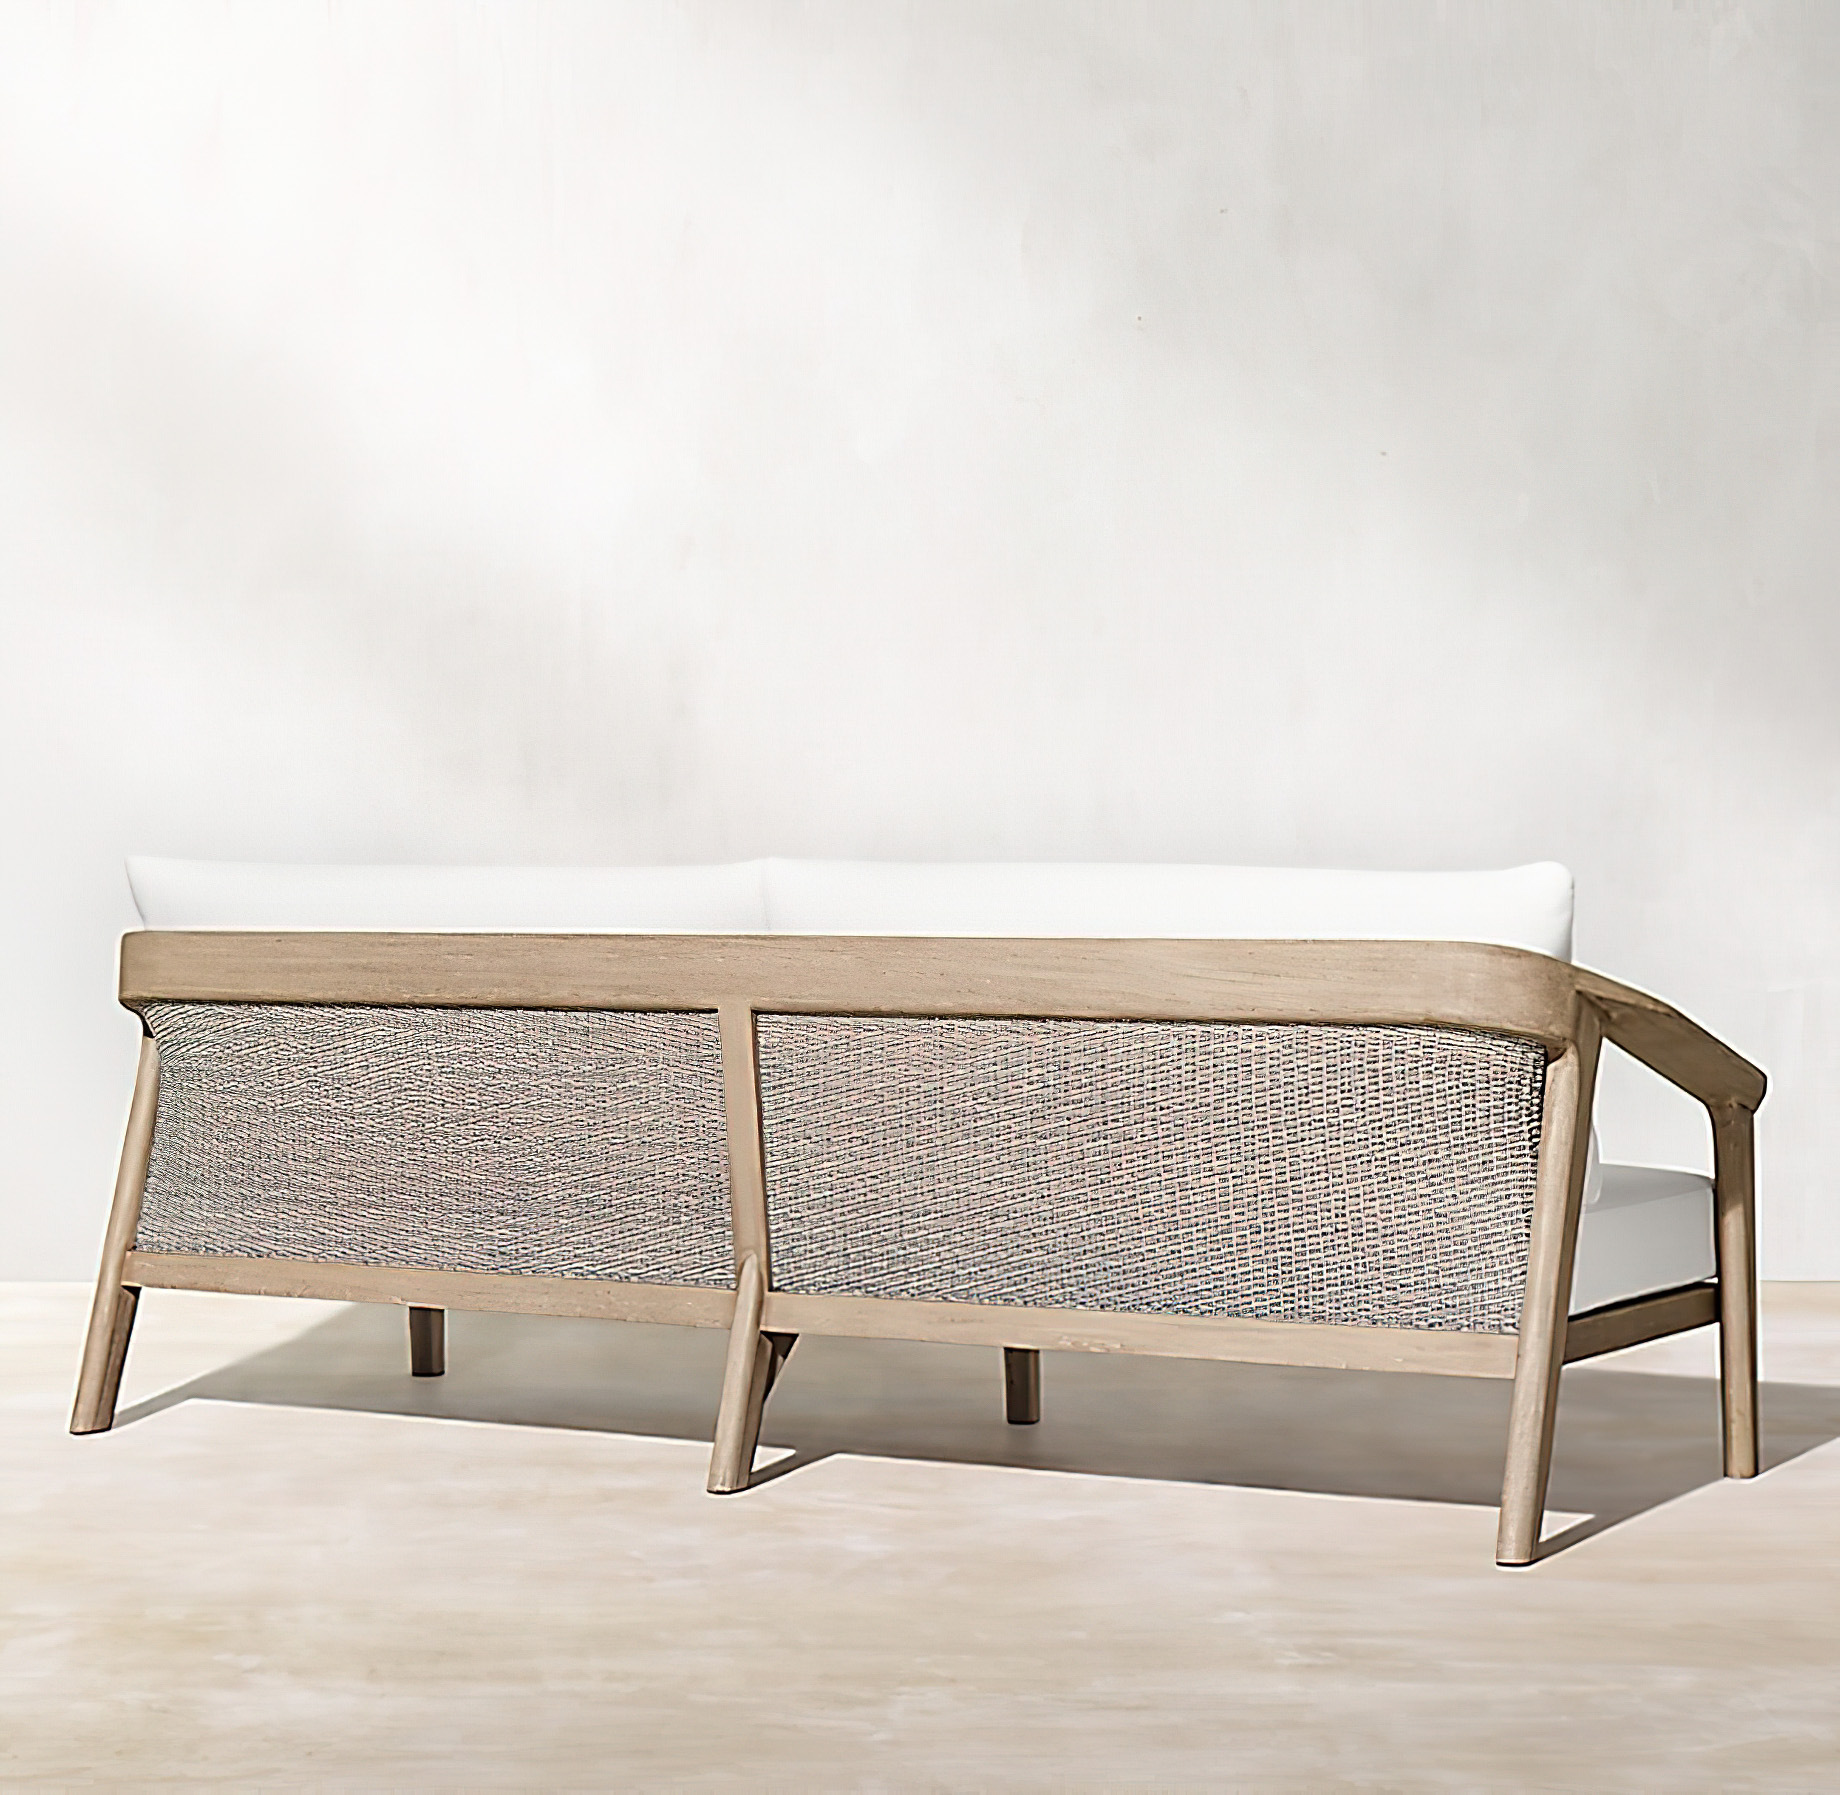 Malta Teak Collection Outdoor Furniture Design for RH – Ramon Esteve – Malta Teak 90 Medium Sofa